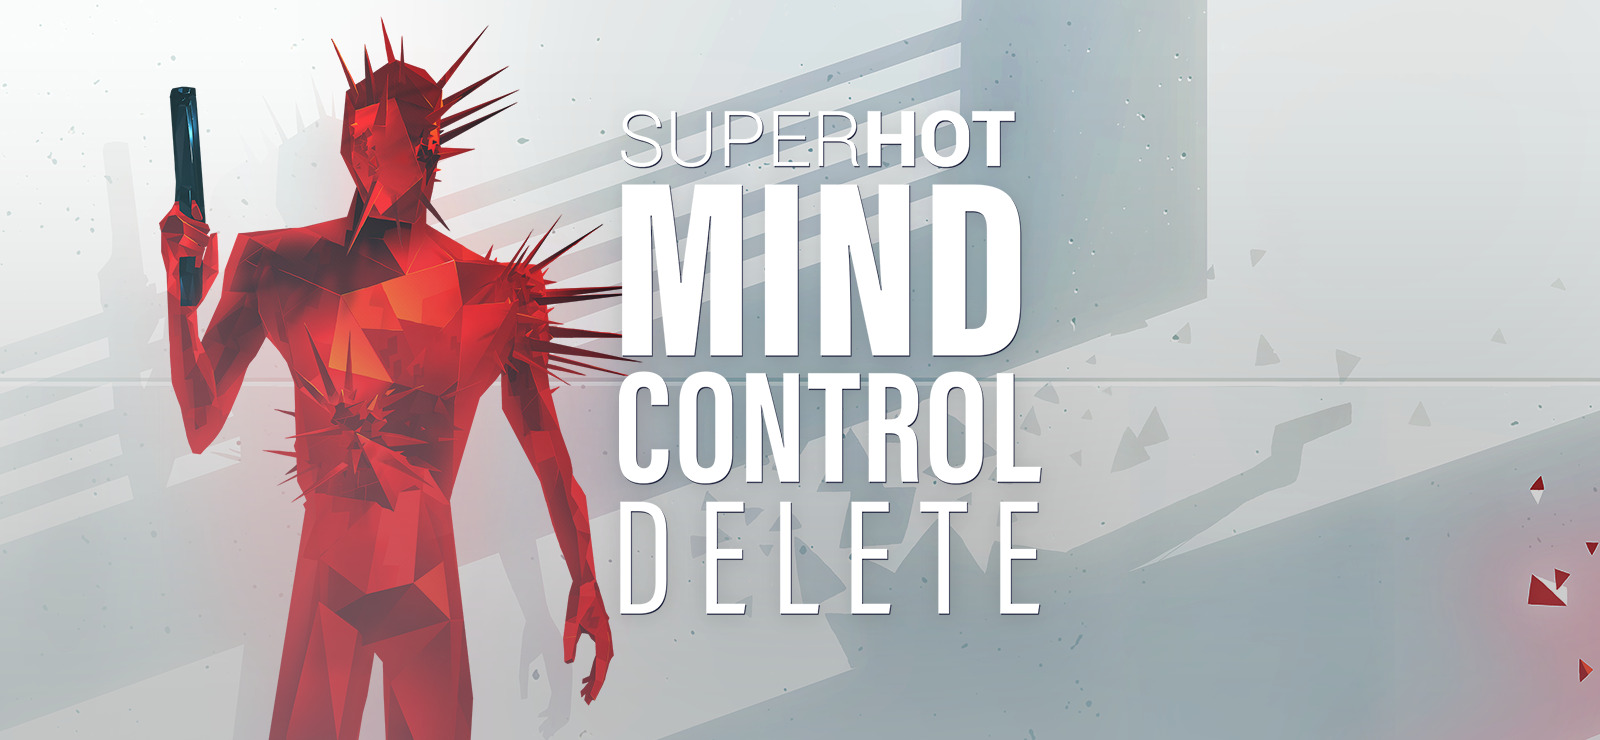 superhot mind control delete enemy types